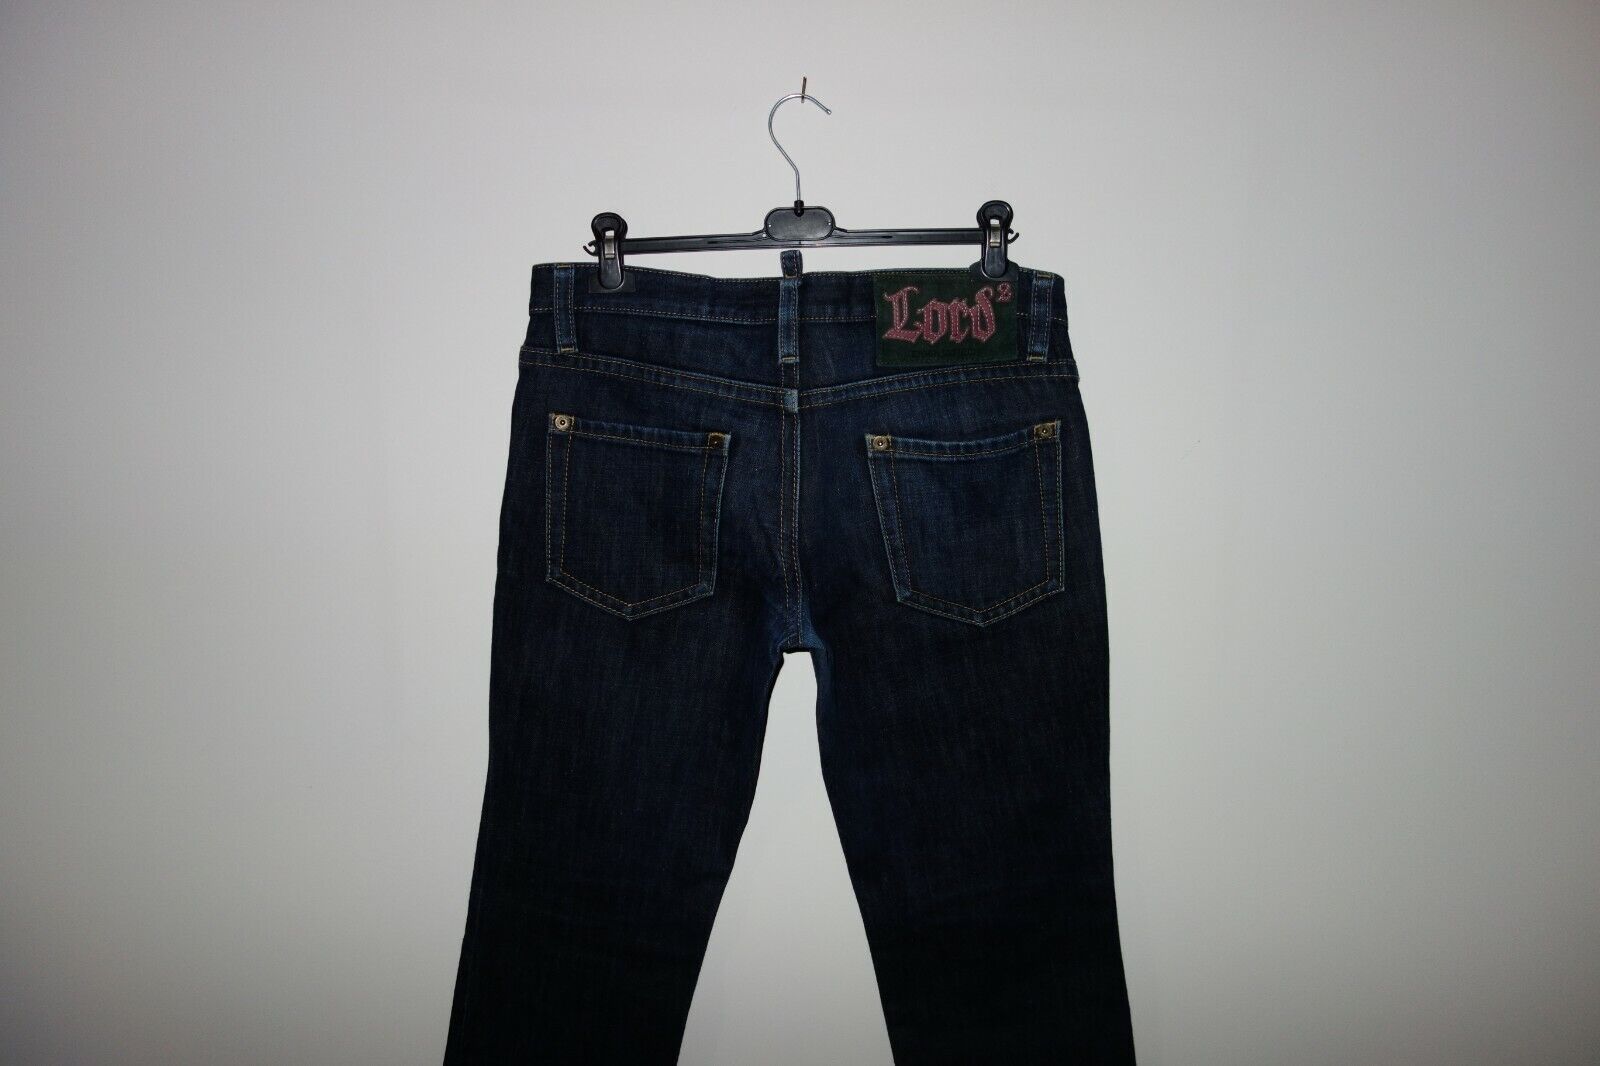 Dsquared² Runway LORD TARTAN Jeans 48 IT 35 US FW/06-07 71LA011 MadeInItaly 550€